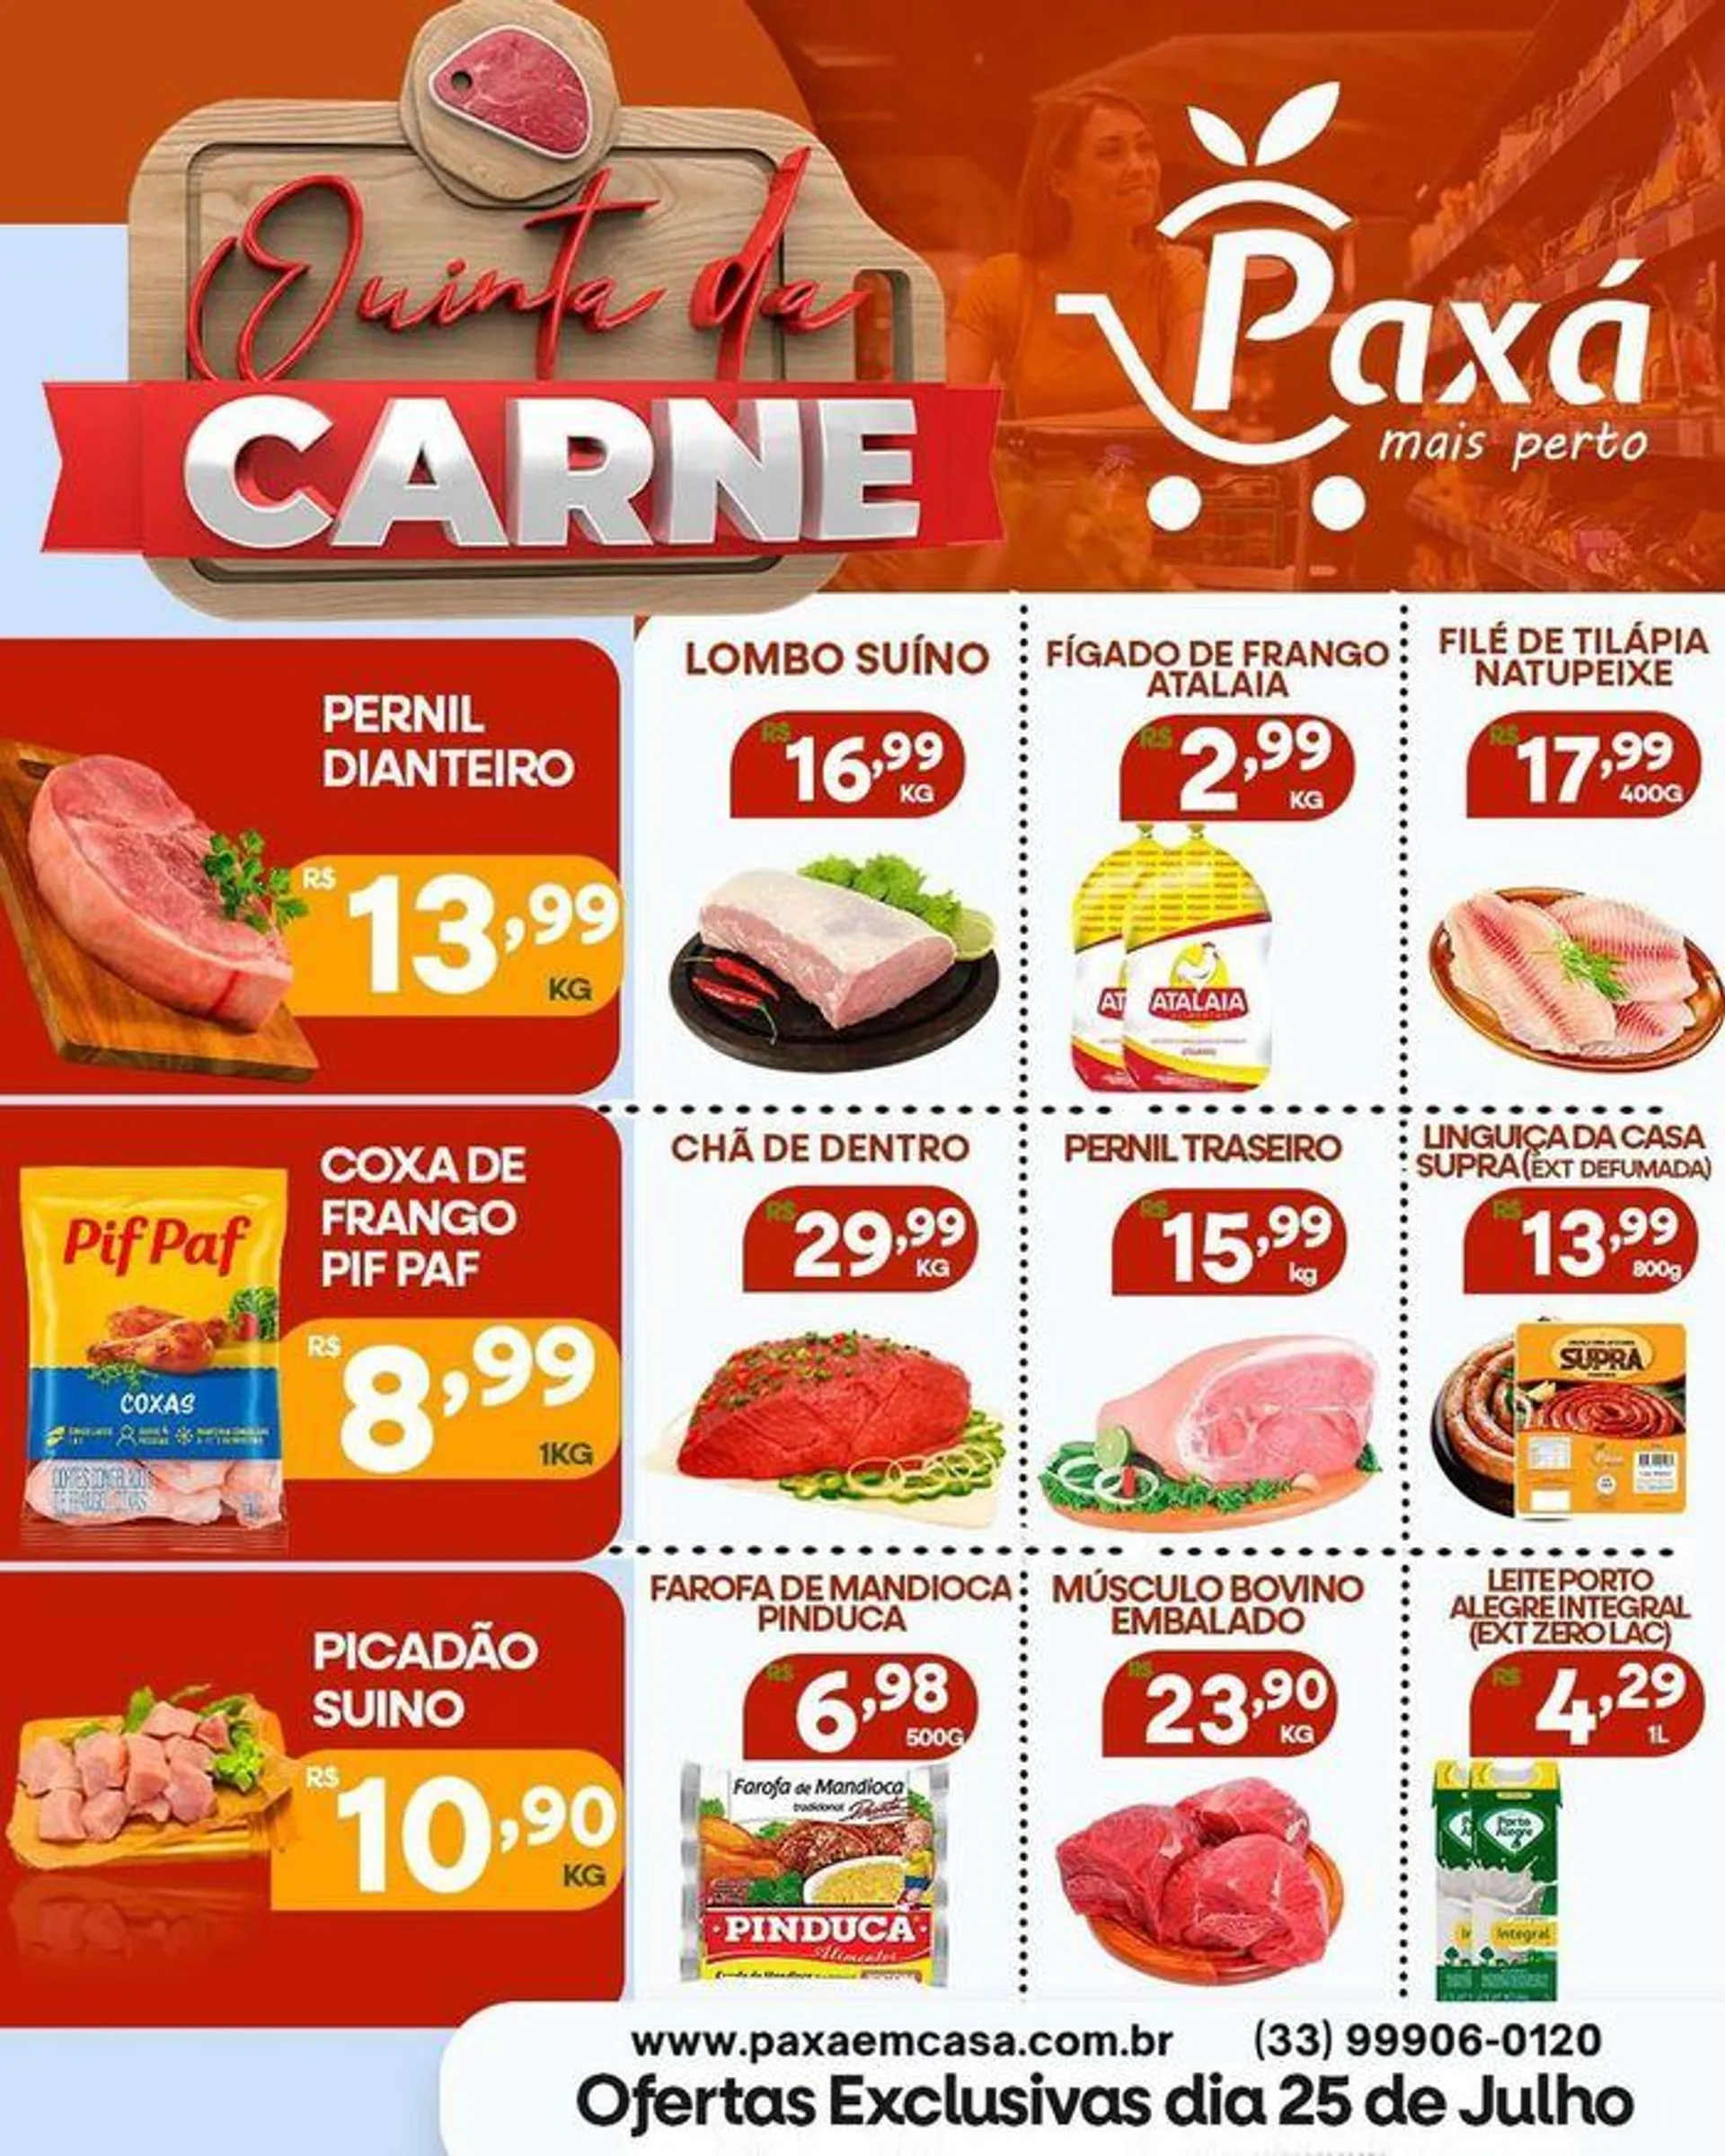 Oferta Paxá Supermercados - 1